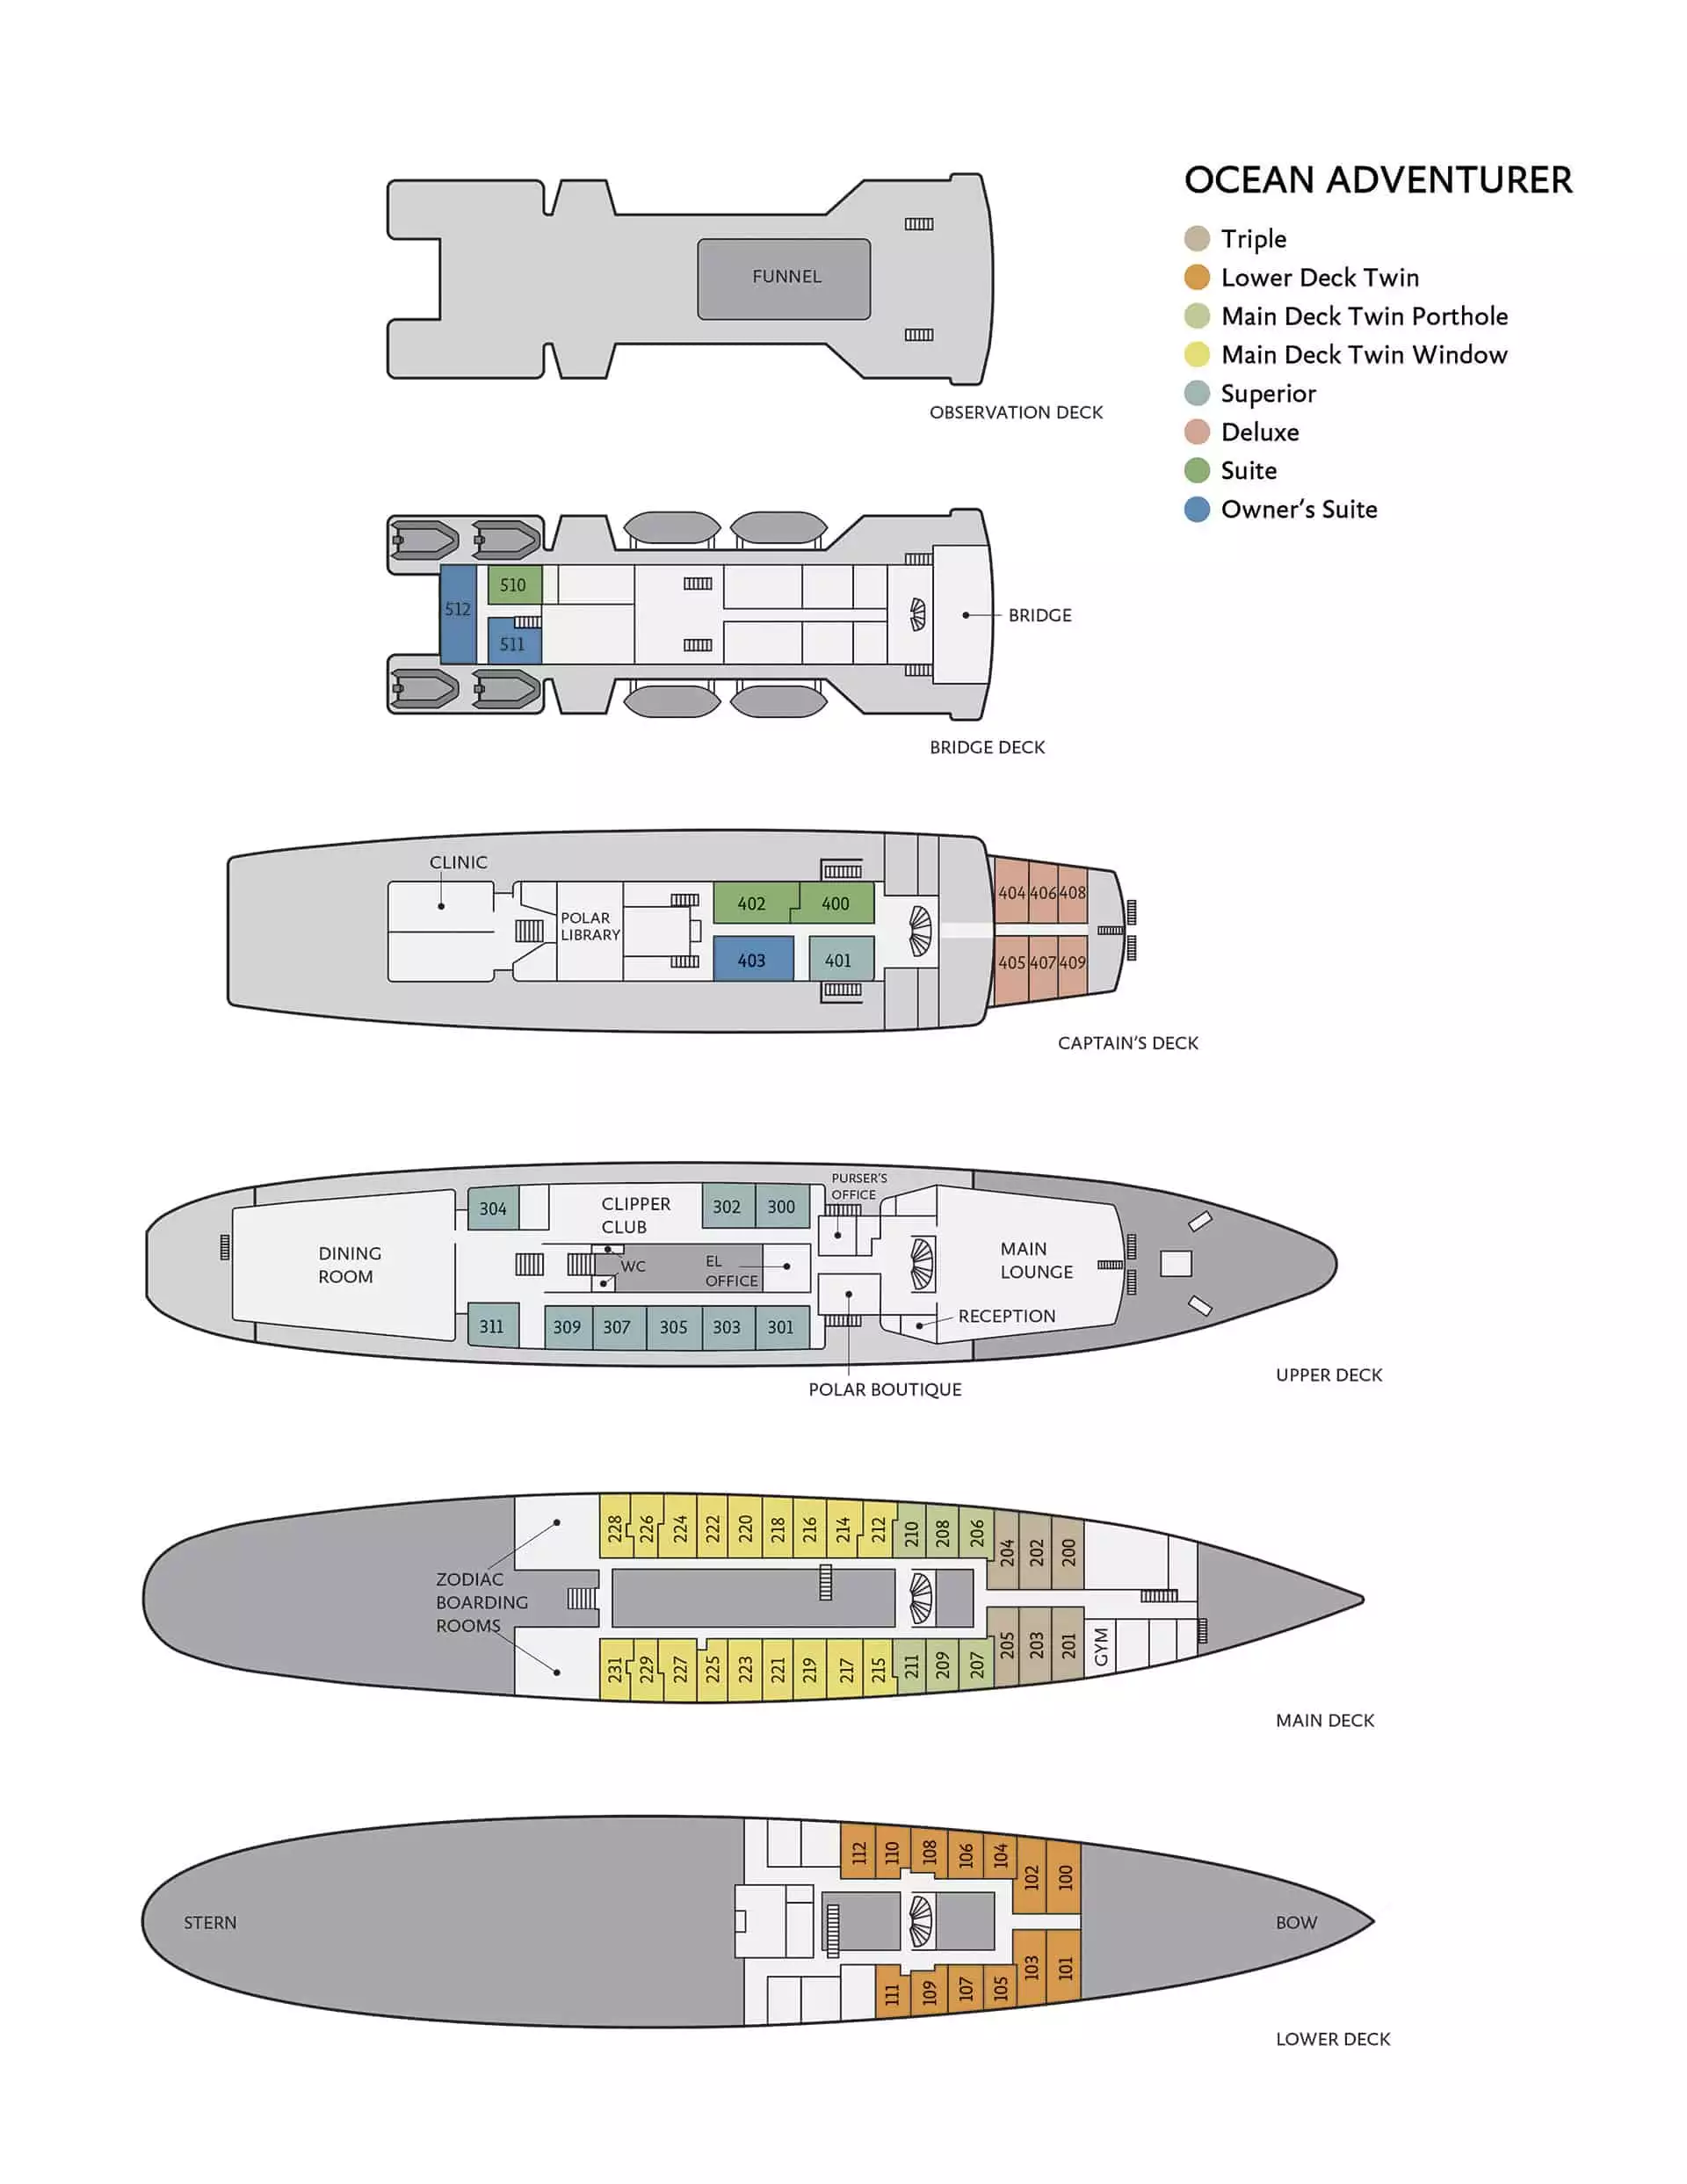 deck plan for the ocean adventurer small ship